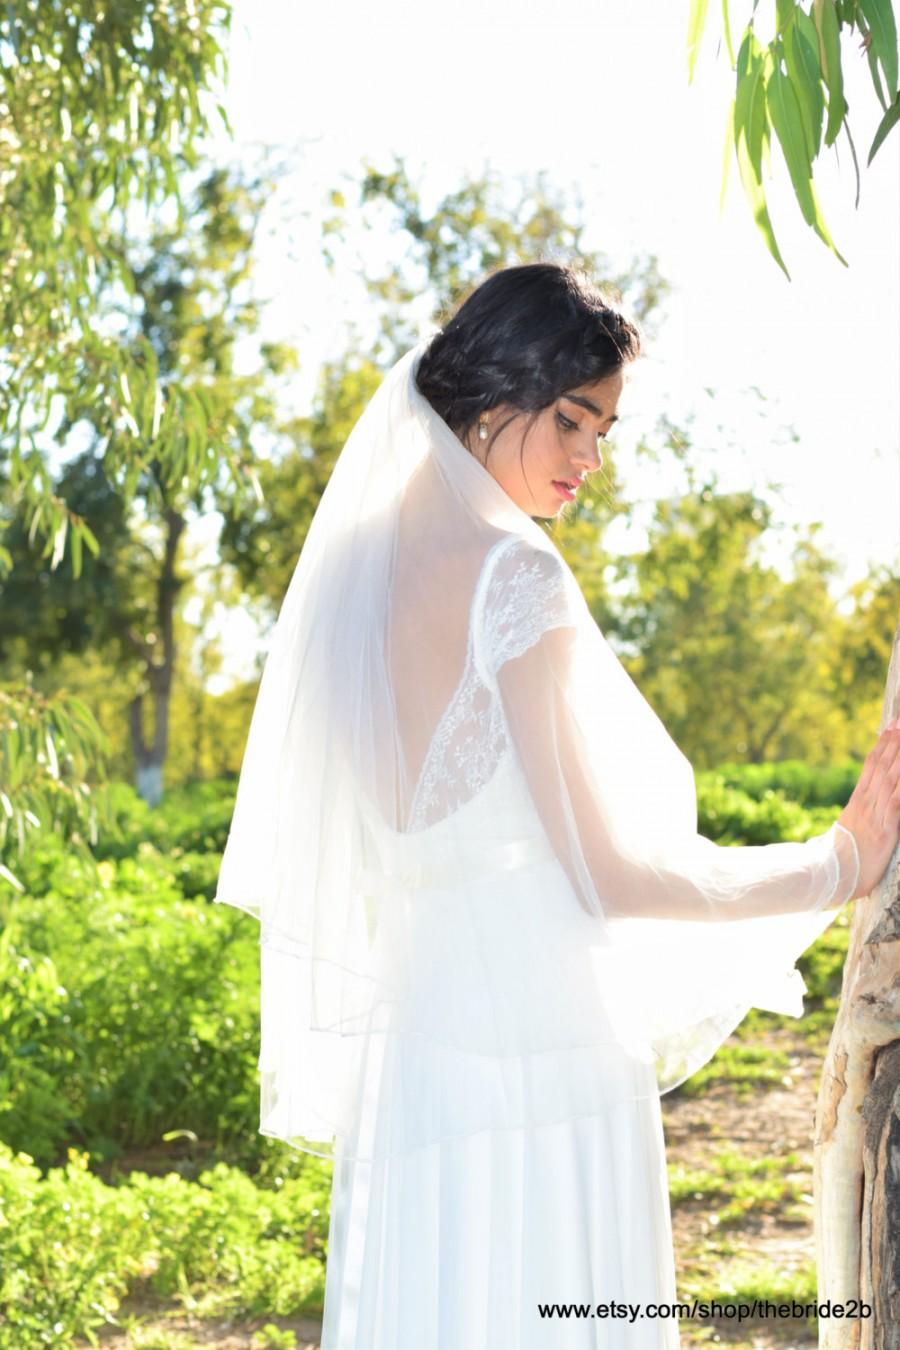 Wedding - Wedding Bridal Veil, wedding veil, Bride Veil, ivory white bridal veil Fingertip length Wedding Bridal Veil white, ivory,